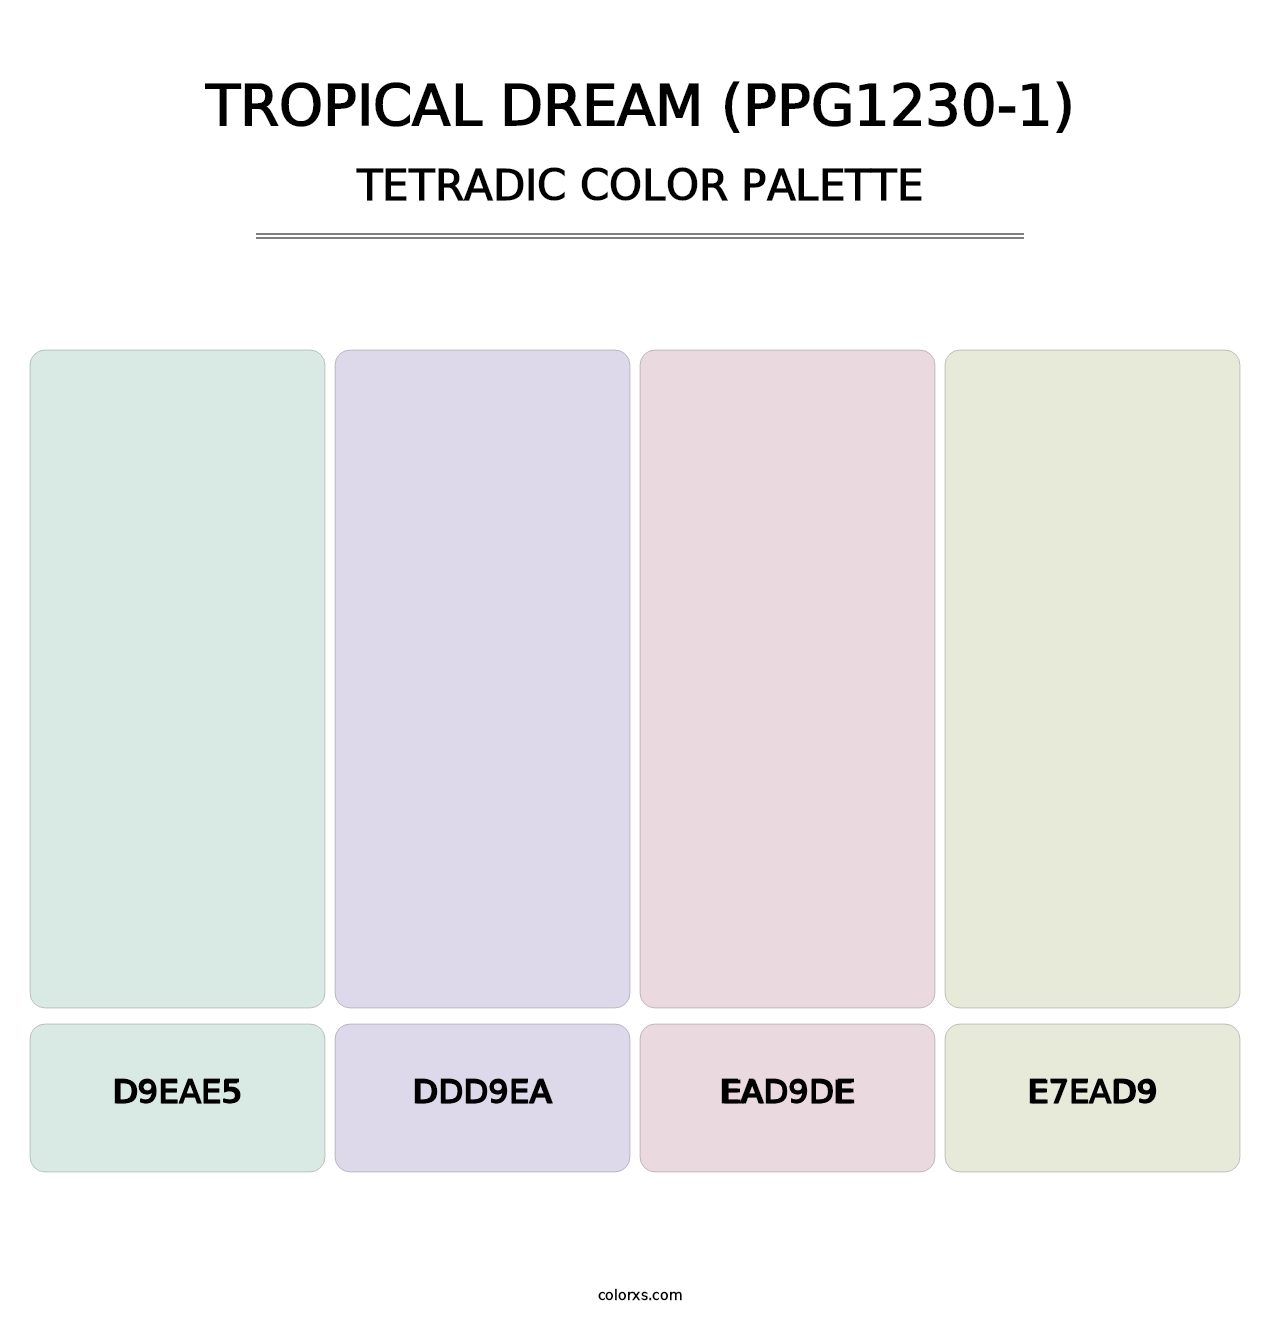 Tropical Dream (PPG1230-1) - Tetradic Color Palette